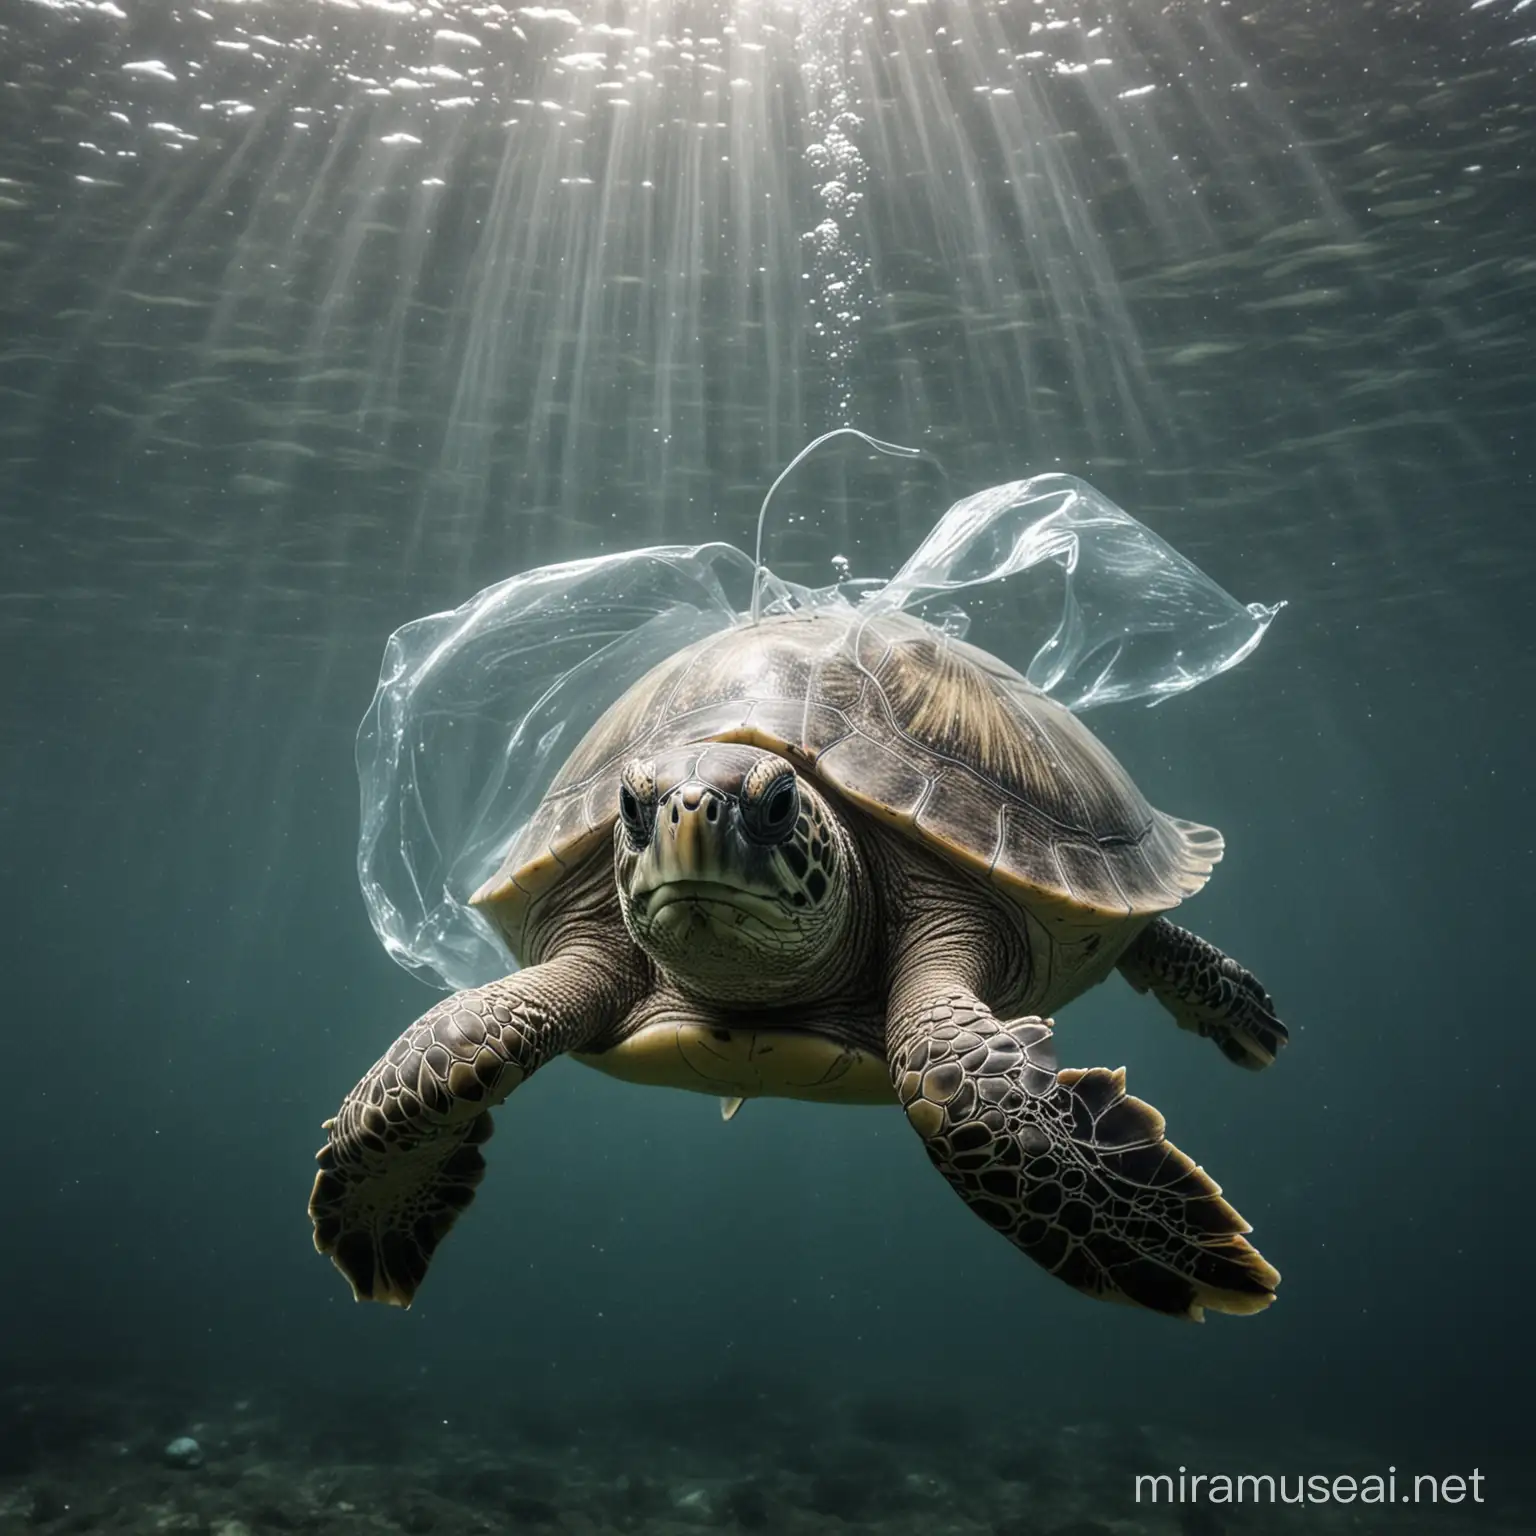 Endangered Turtle Encircled by Marine Debris in the Deep Blue